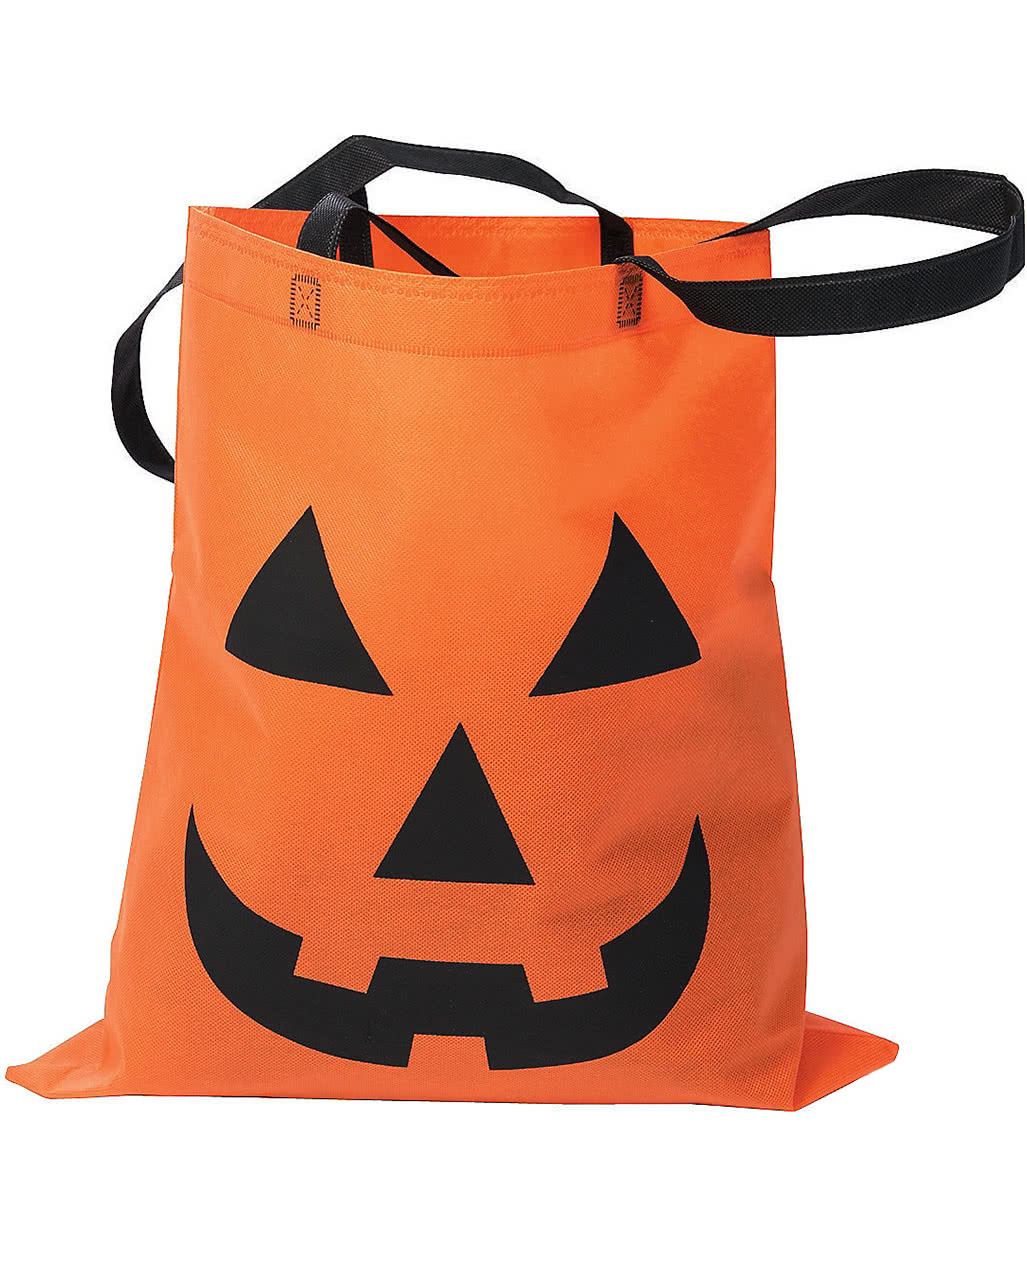 Halloween tote bag Halloween Carved pumpkin Trick or treat candy bag |\u00a0Pumpkin candy bag Halloween candy bag Trick or treat tote